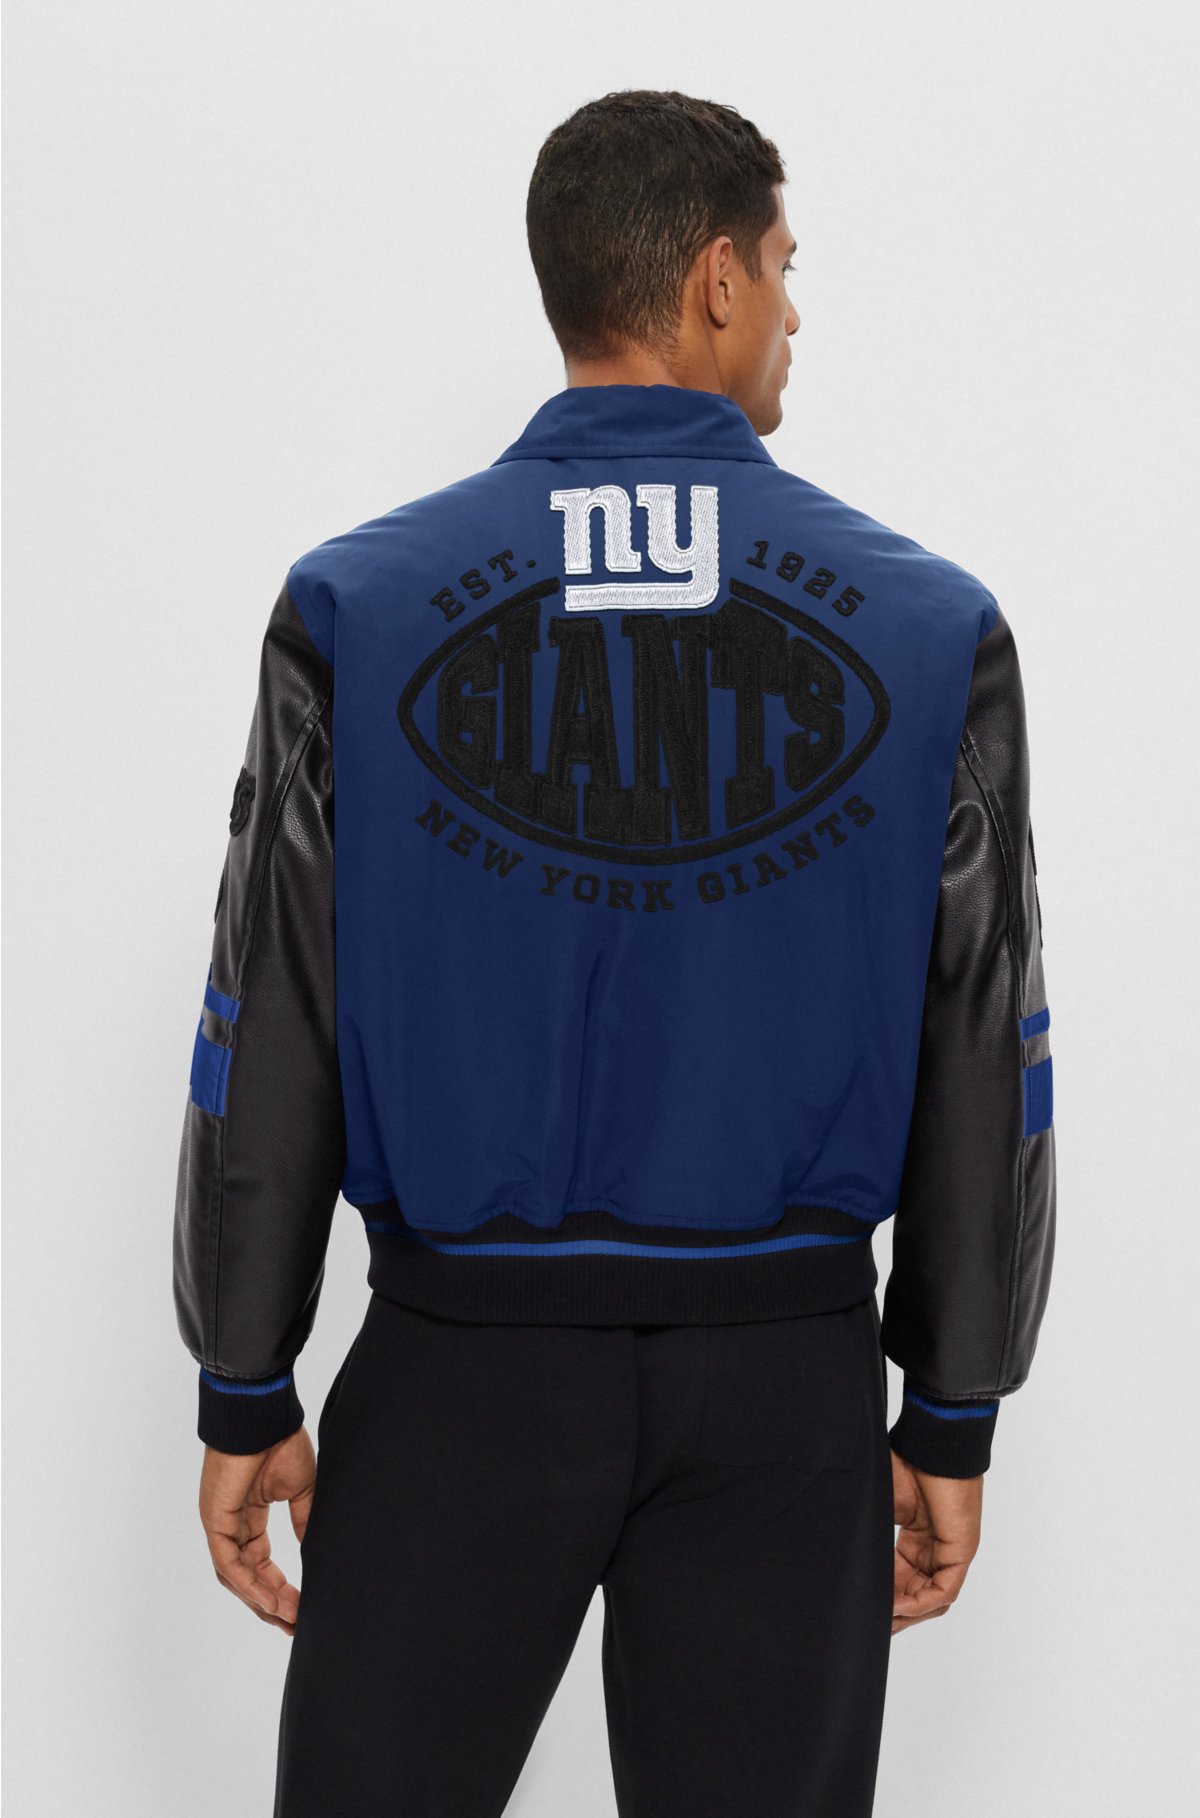  BOSS x NFL water-repellent bomber jacket with collaborative branding, Giants